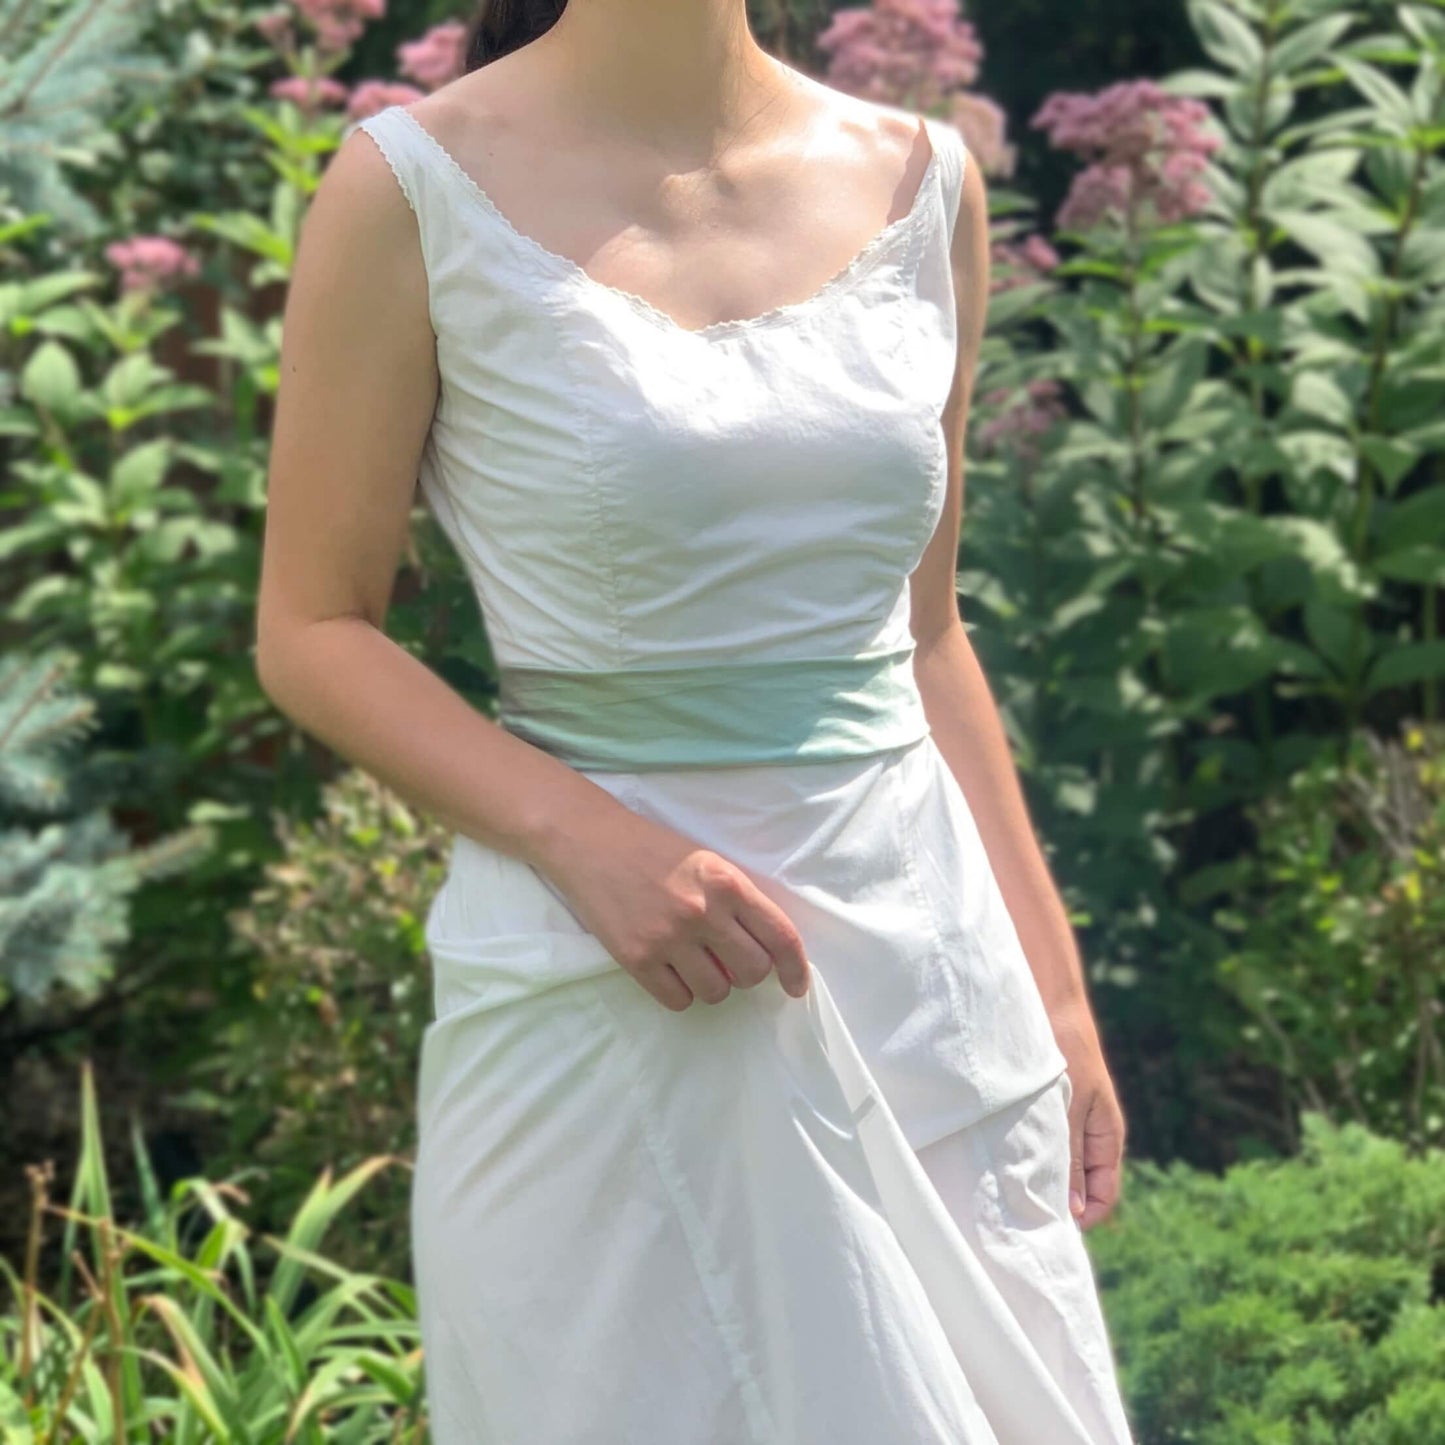 girl standing in a yard wearing an antique wedding dress